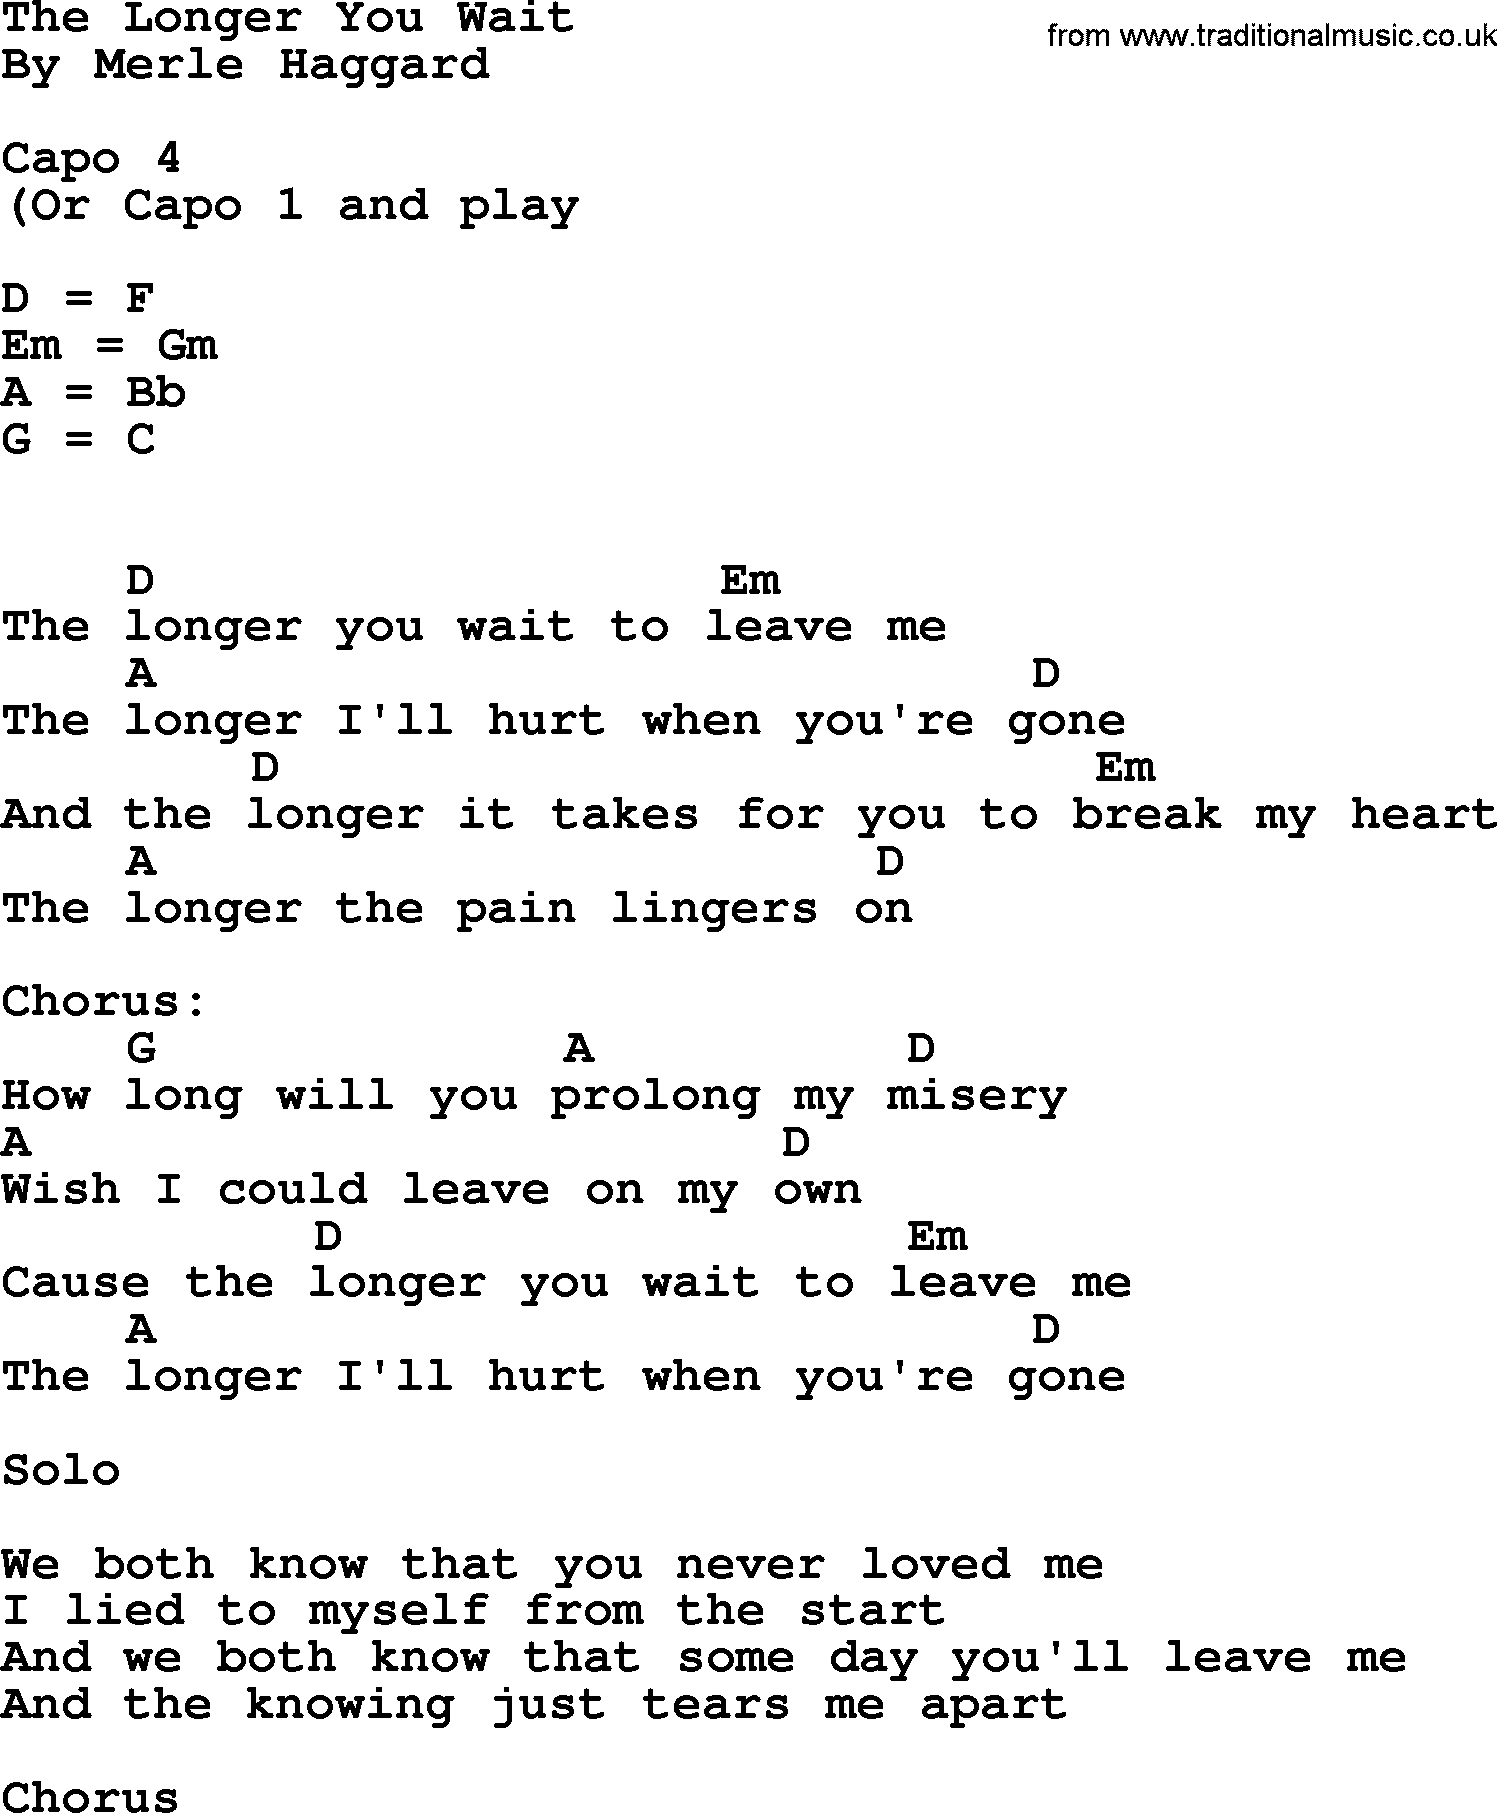 Merle Haggard song: The Longer You Wait, lyrics and chords